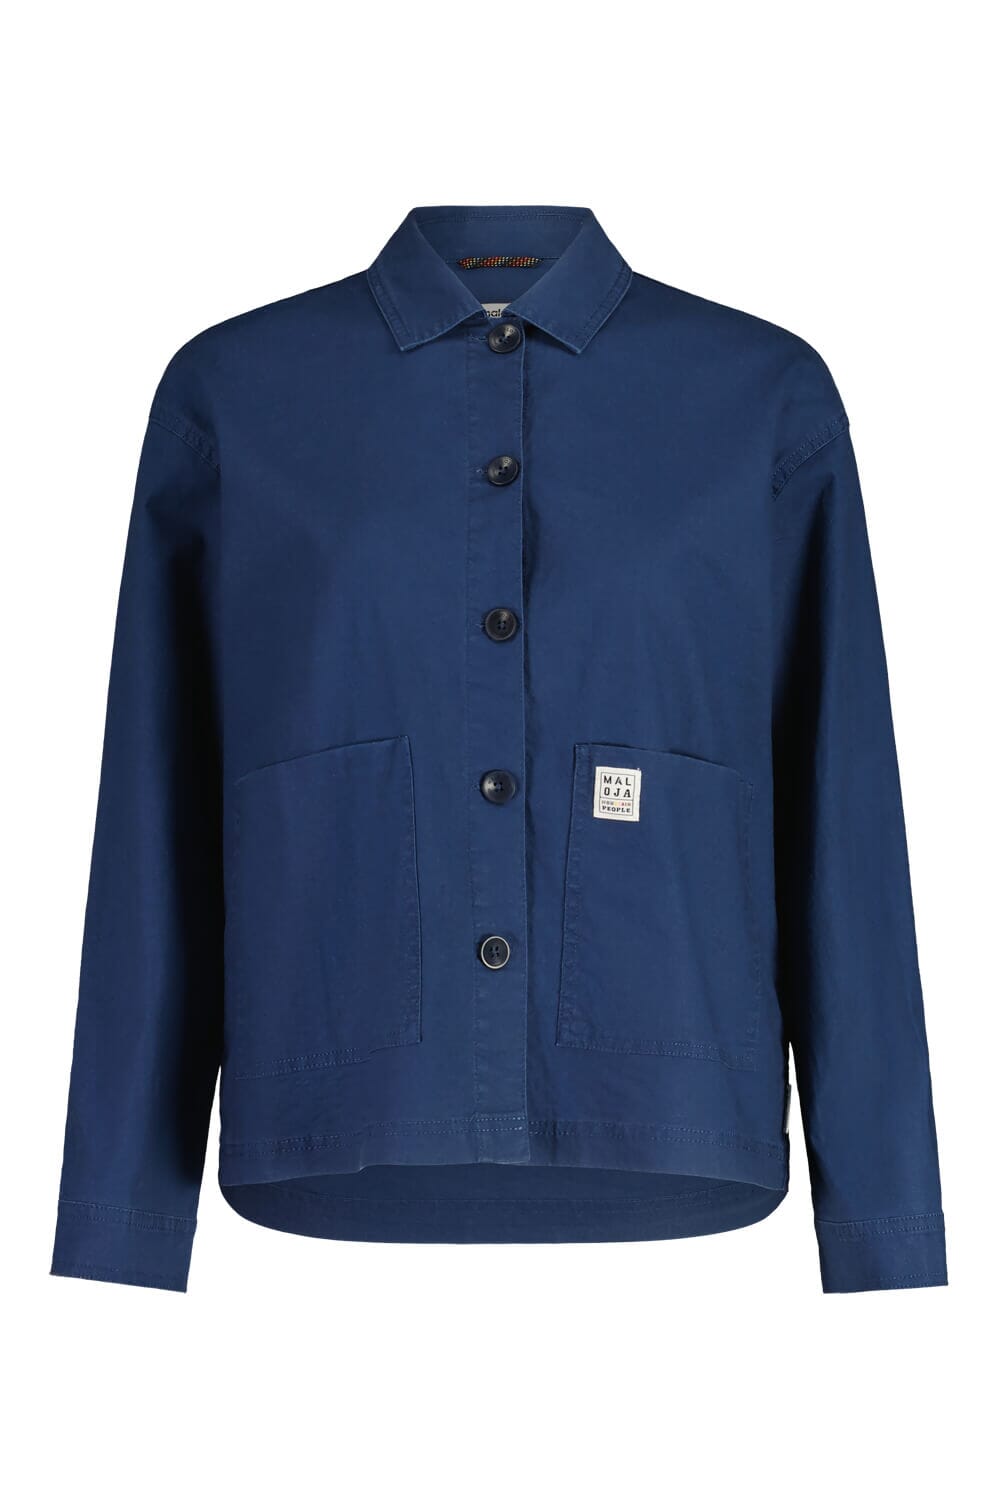 Maloja - SchwarzensteinM. jacket - Hemp & Organic Cotton - Weekendbee - sustainable sportswear